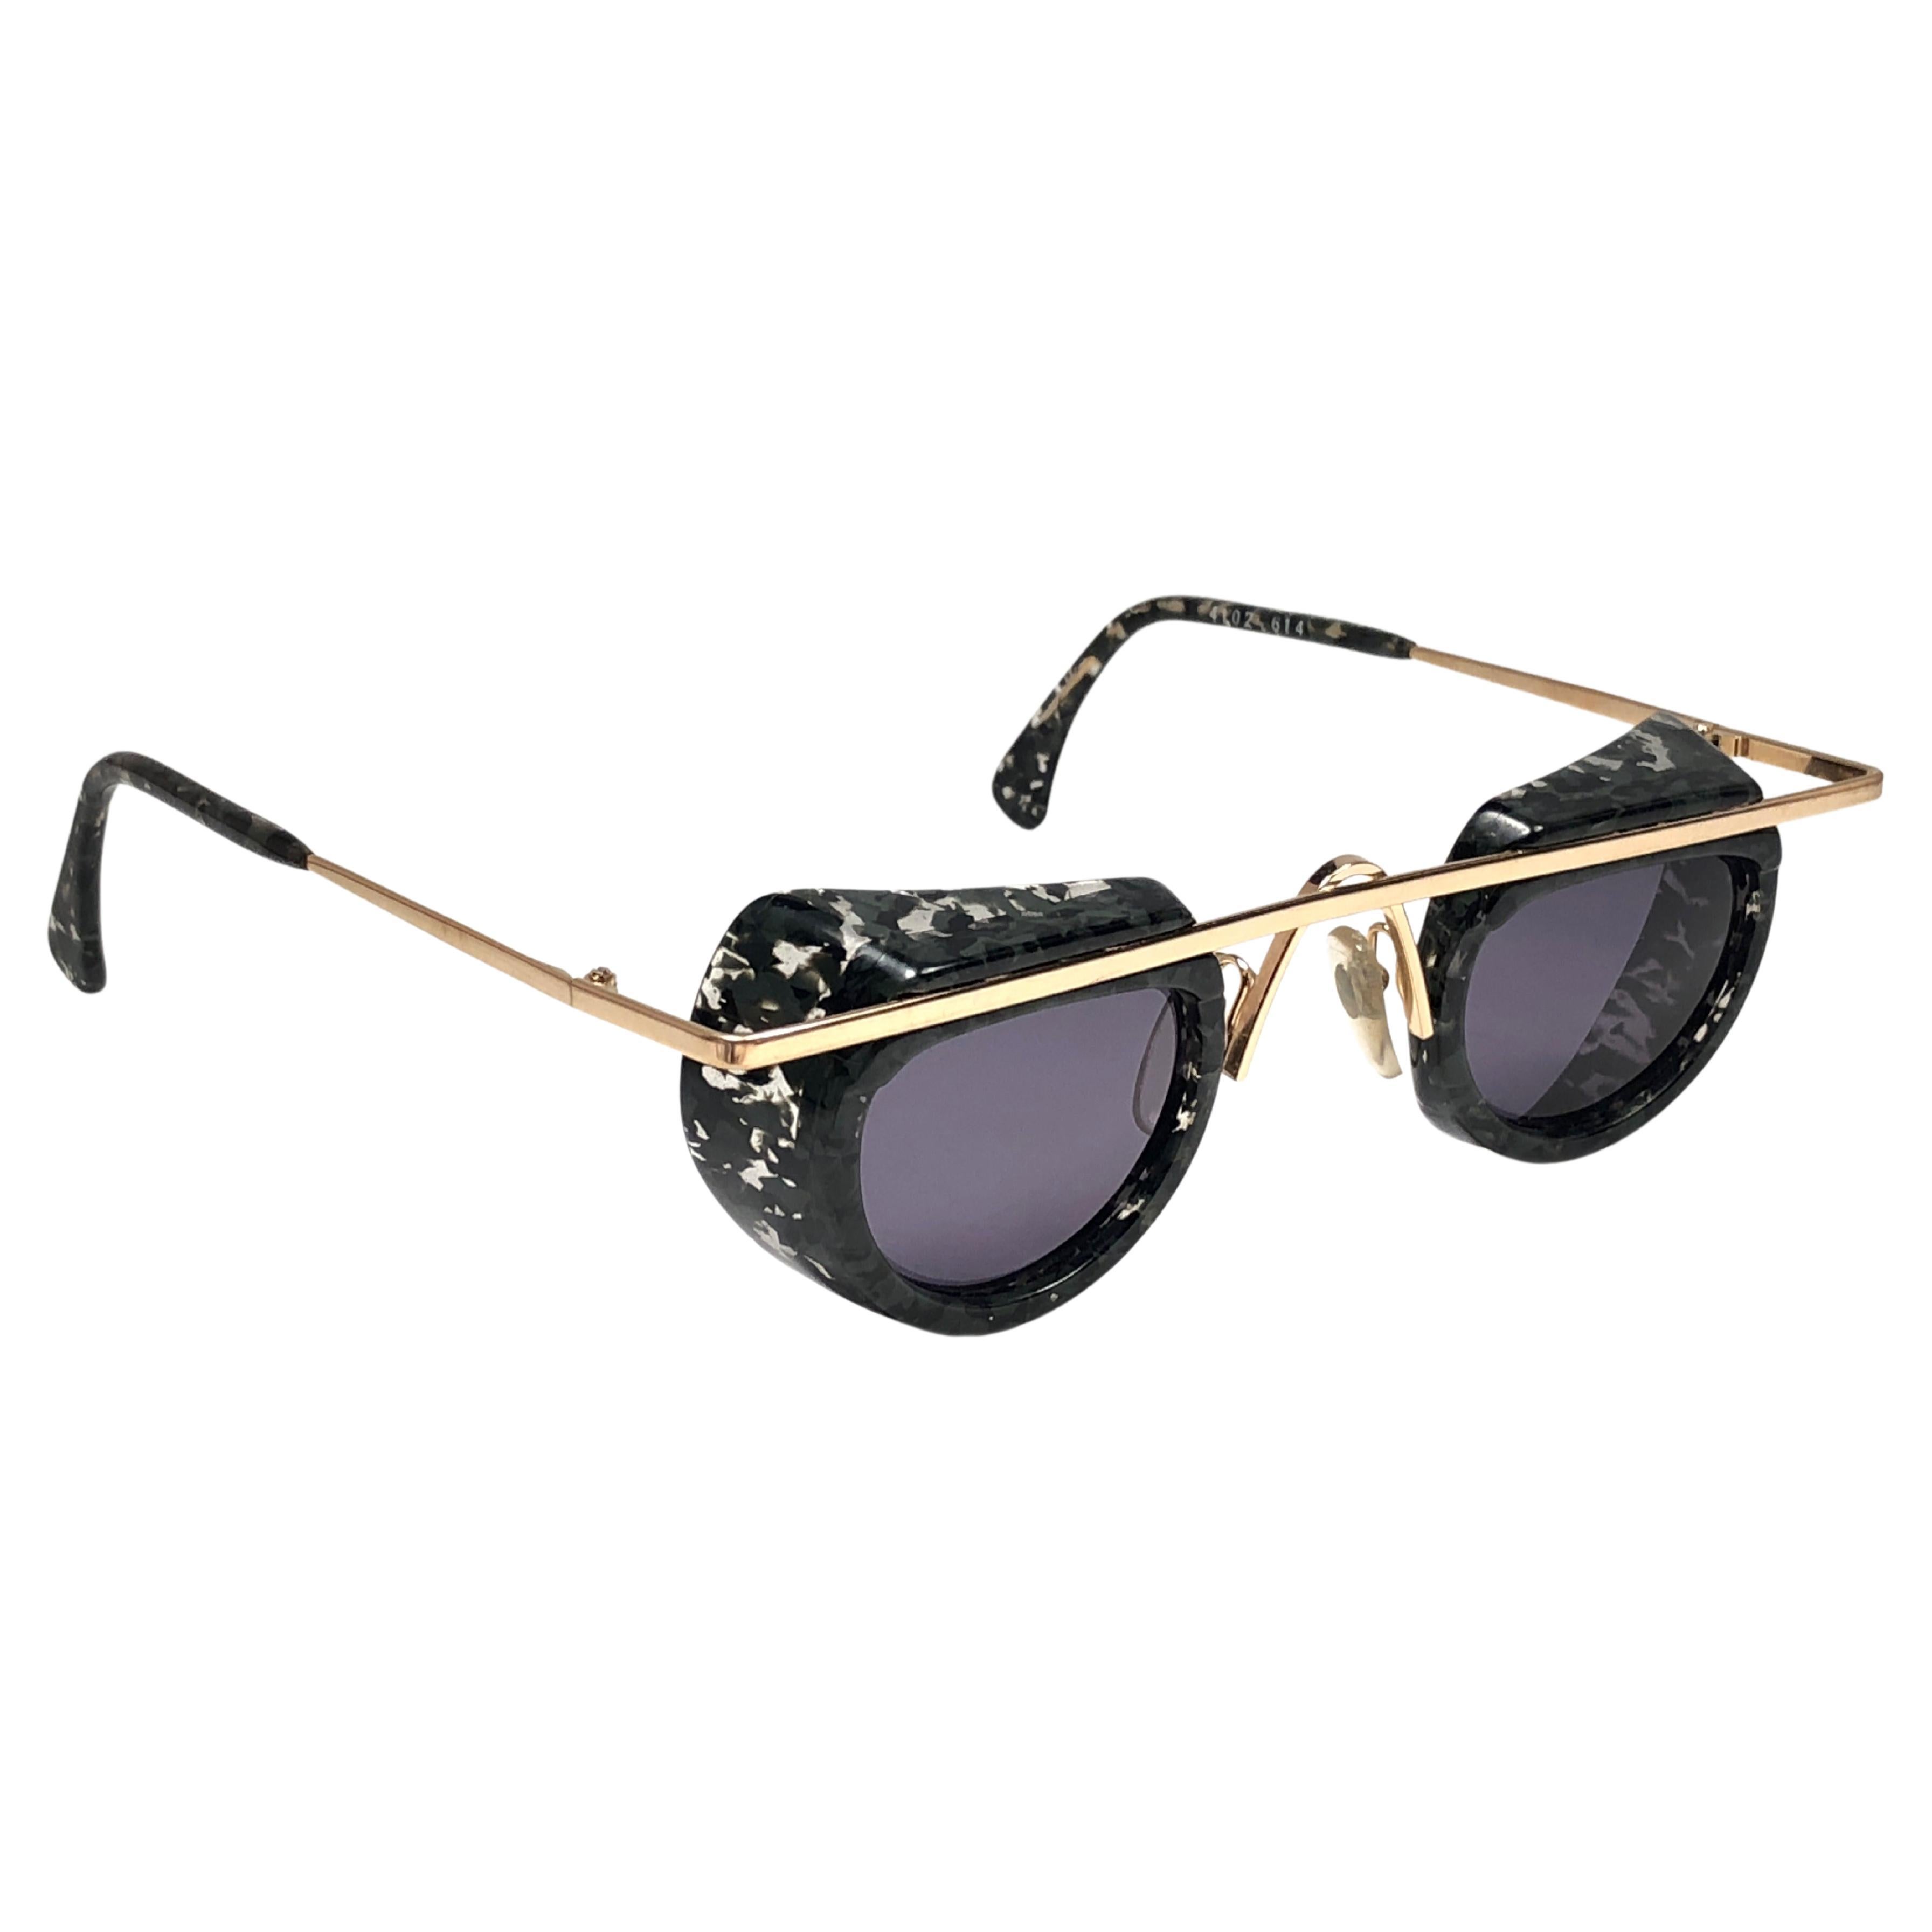 Mint Vintage Rare Alain Mikli 4102 614 Camouflage Sunglasses 1990 For Sale